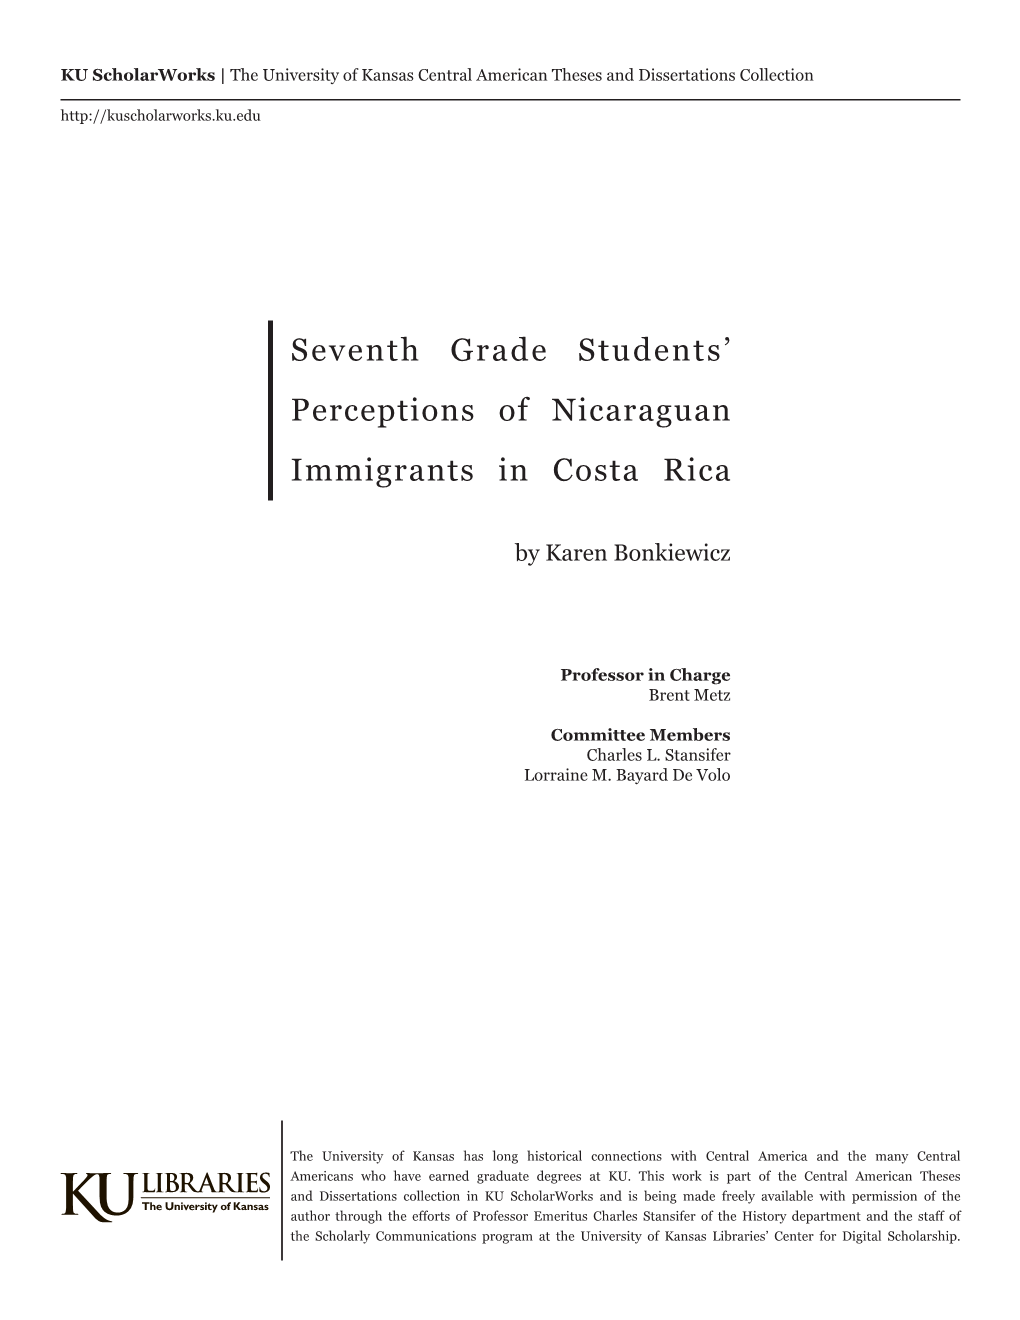 Seventh Grade Students' Perceptions of Nicaraguan Immigrants in Costa